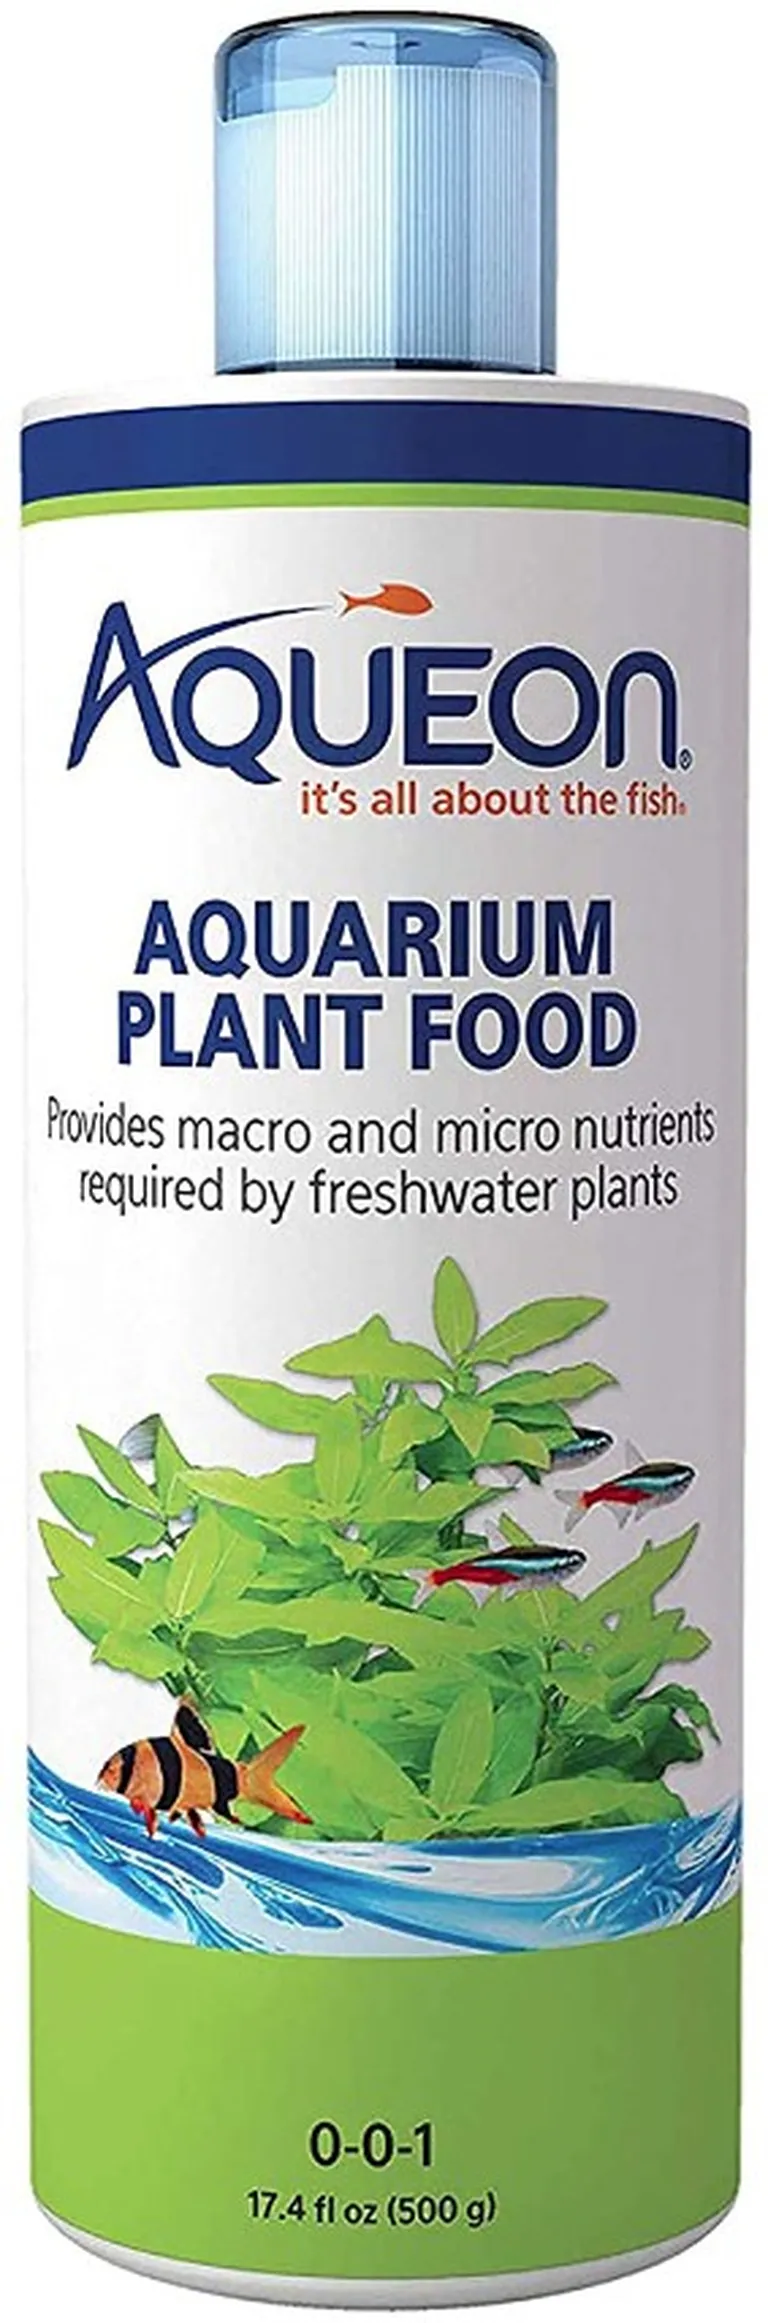 Aqueon Aquarium Plant Food Provides Macro and Micro Nutrients for Freshwater Plants Photo 1